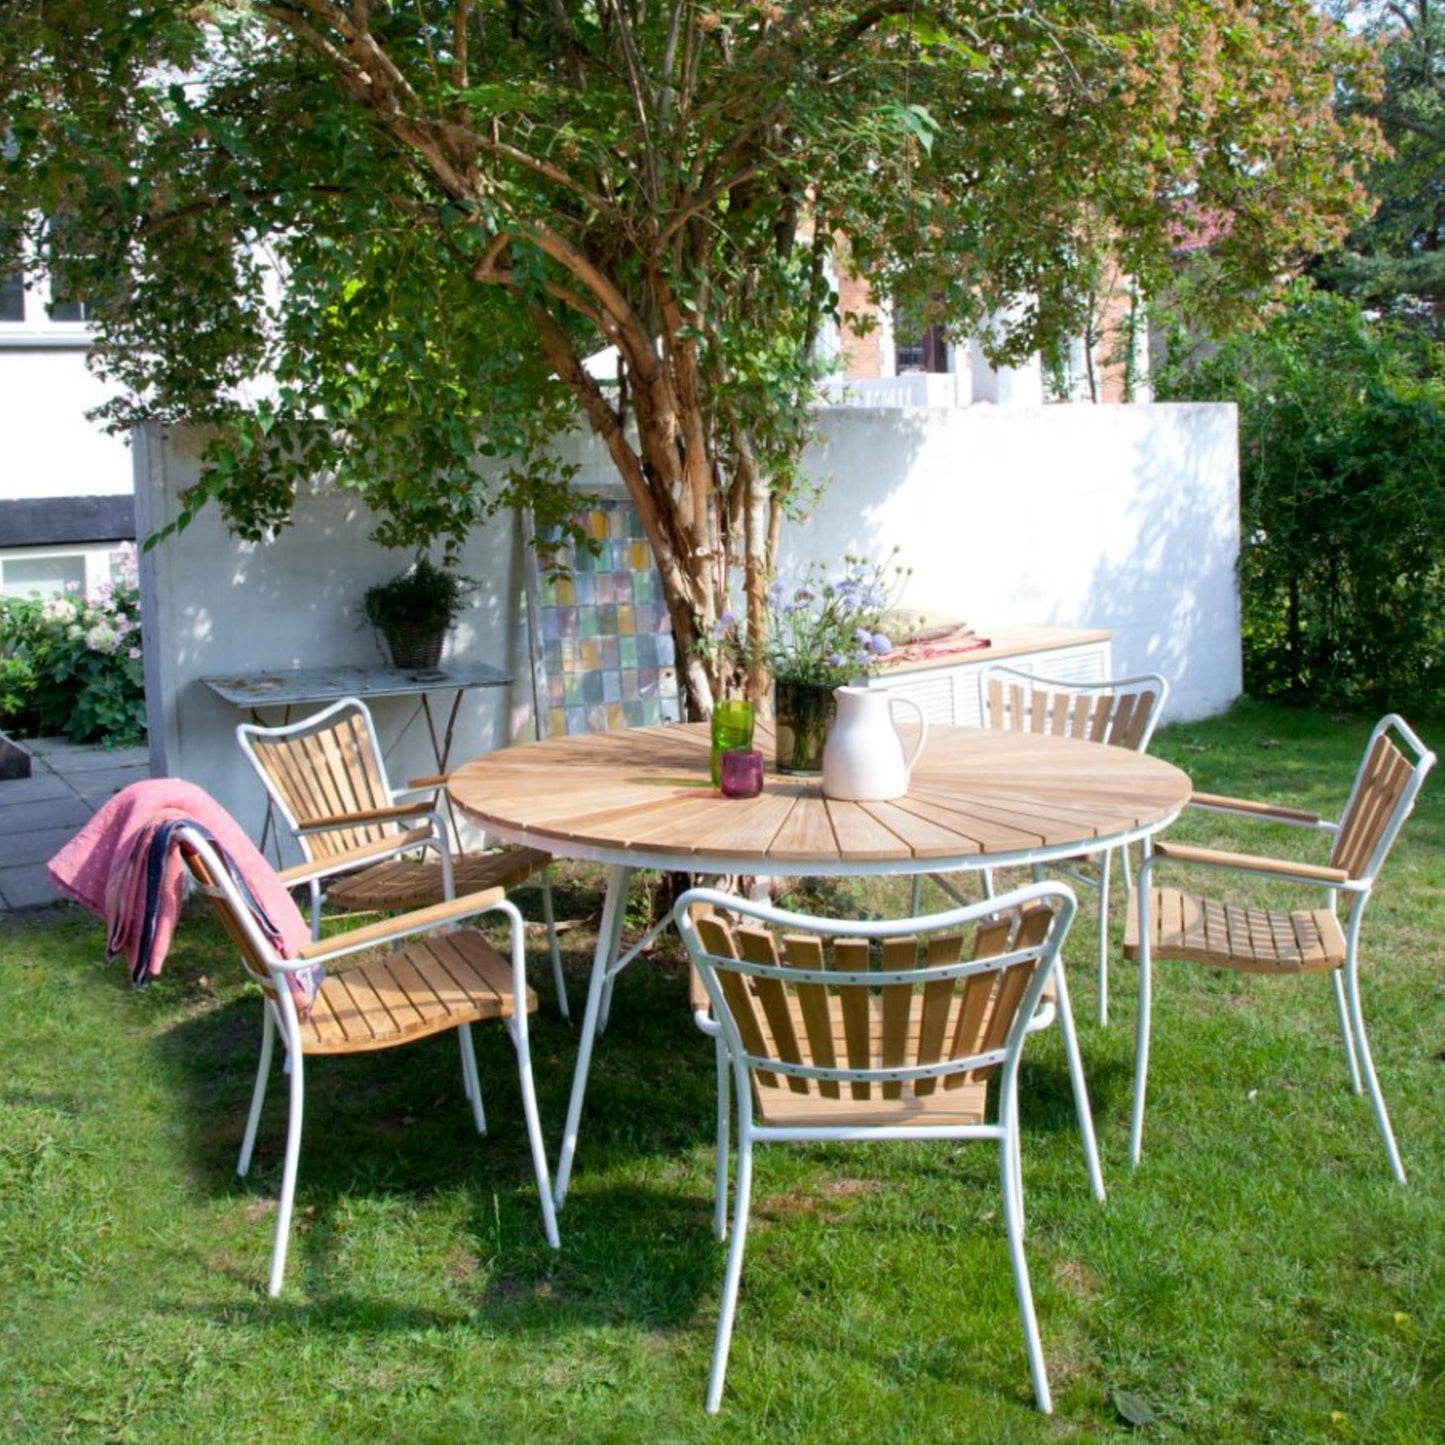 'Ellen' garden furniture set: 130cm table and 5 chairs